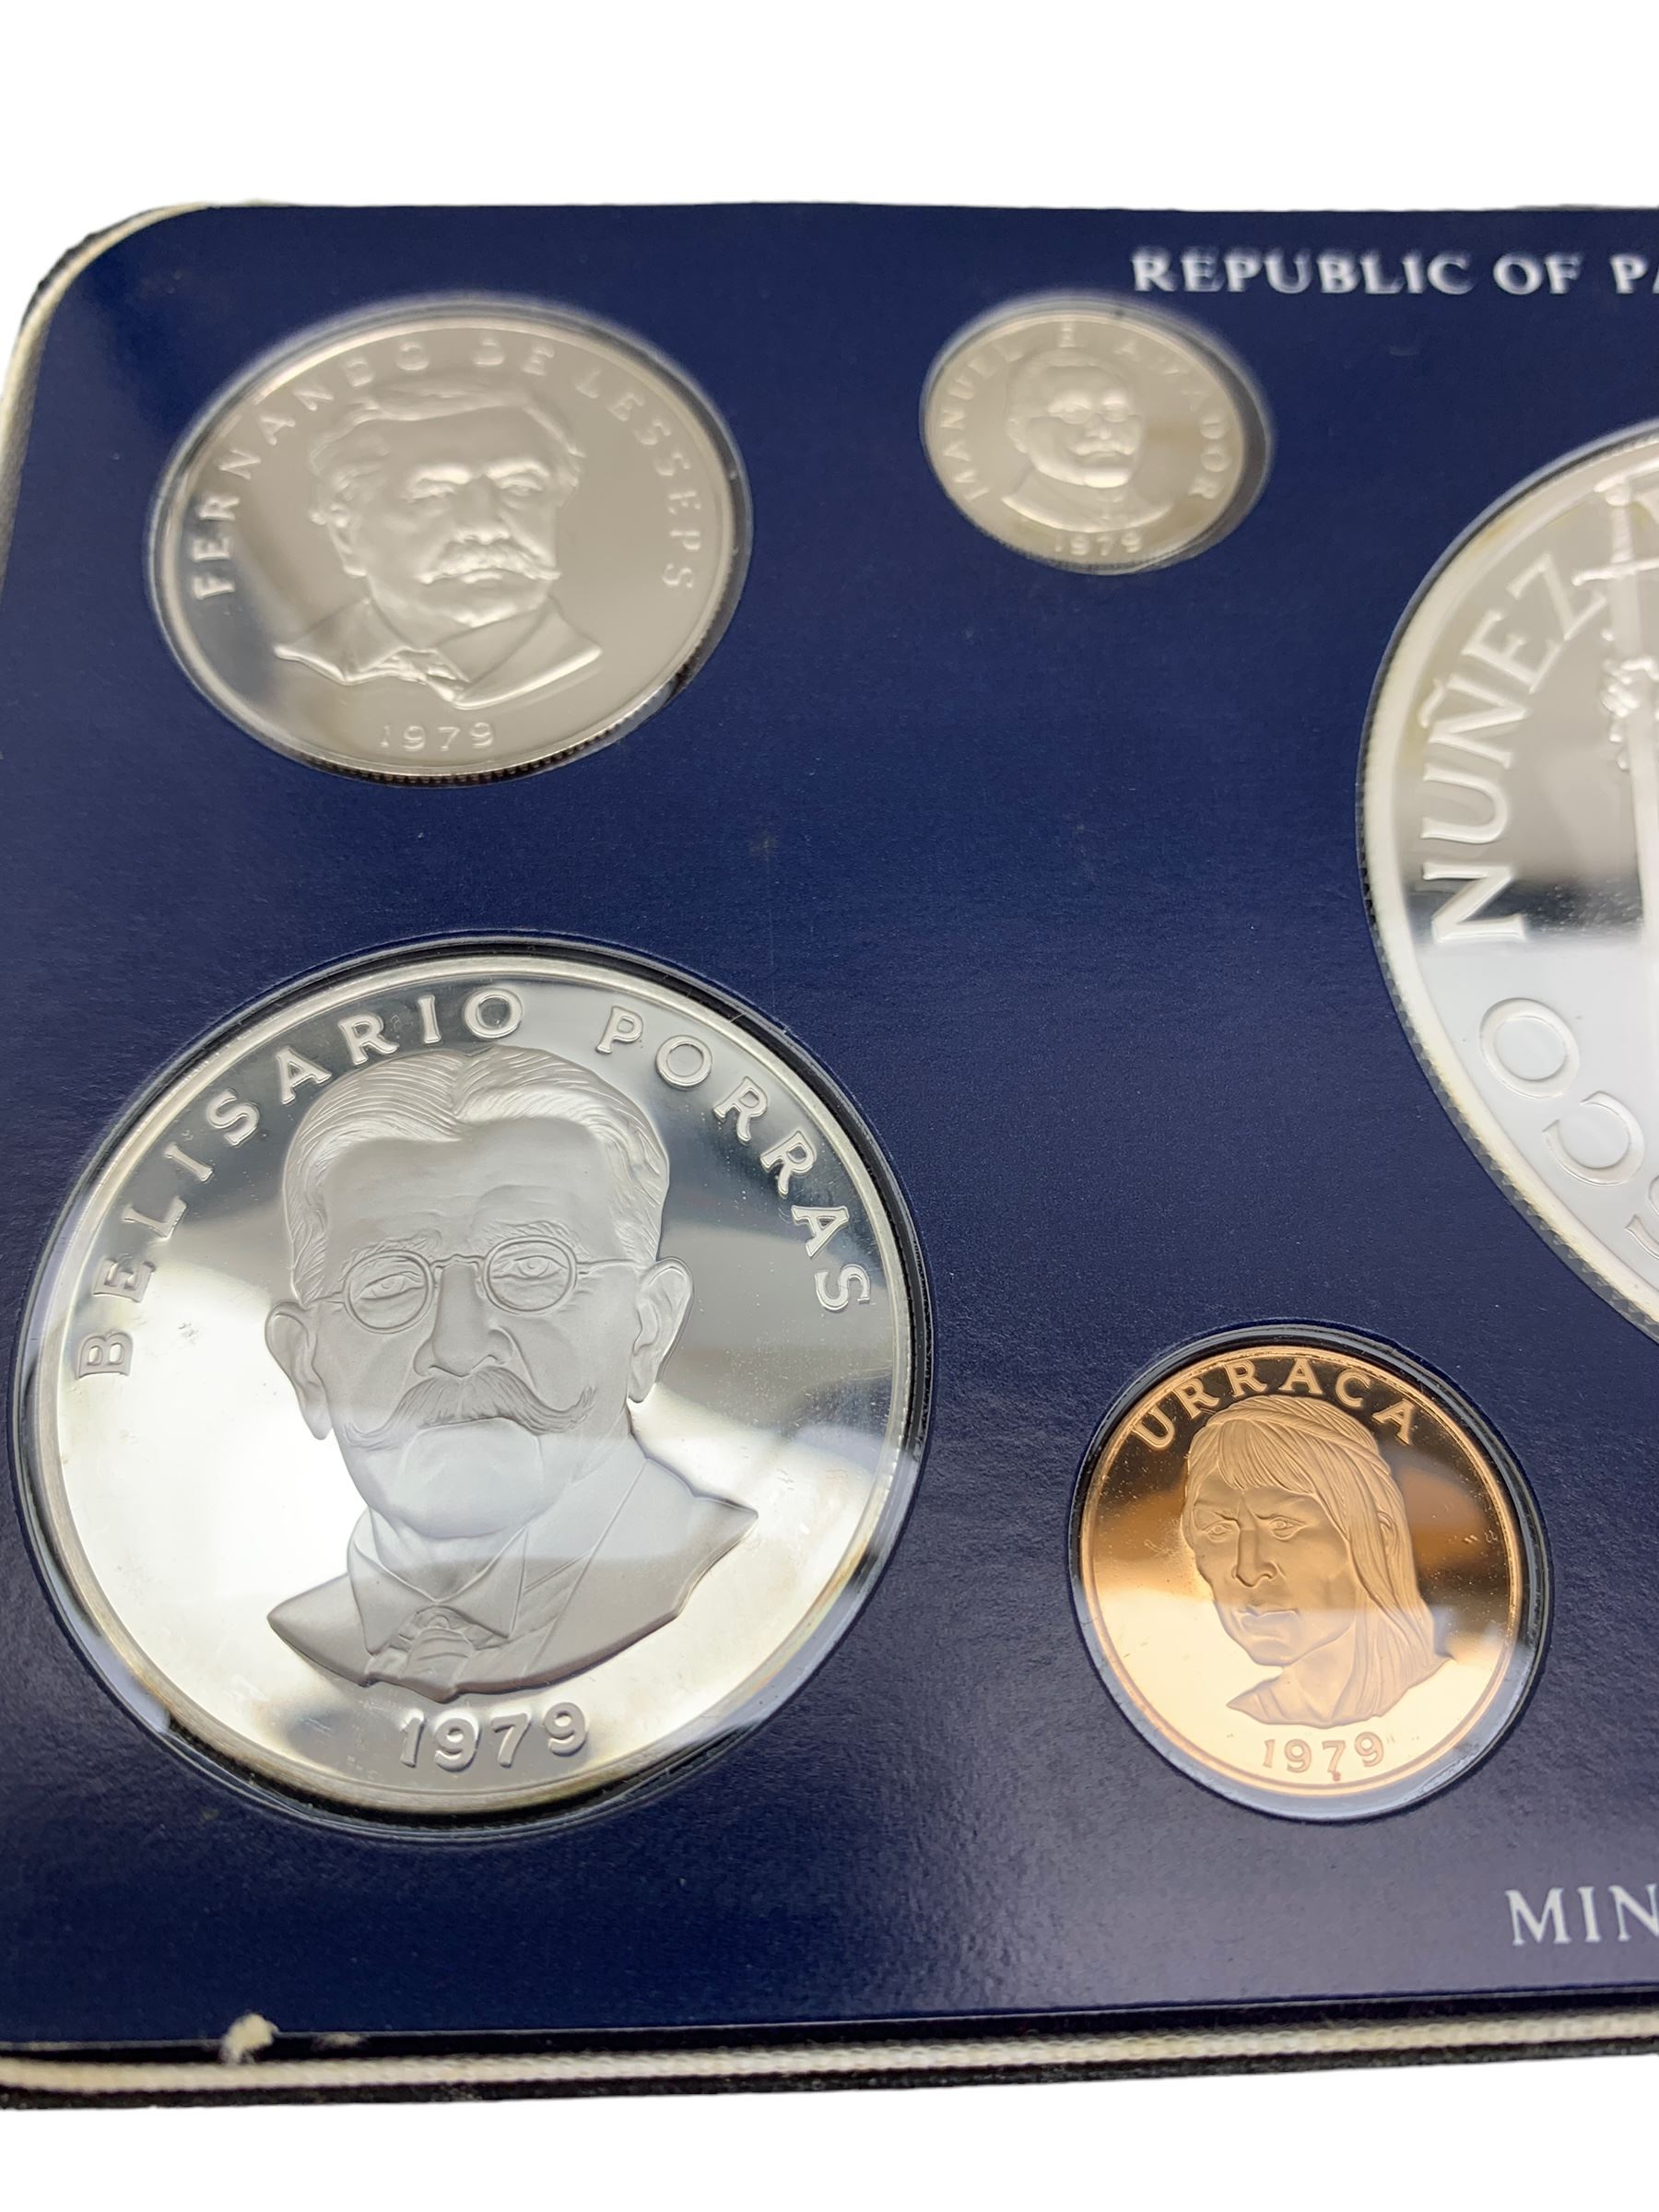 Republic of Panama proof nine coin set - Image 5 of 5